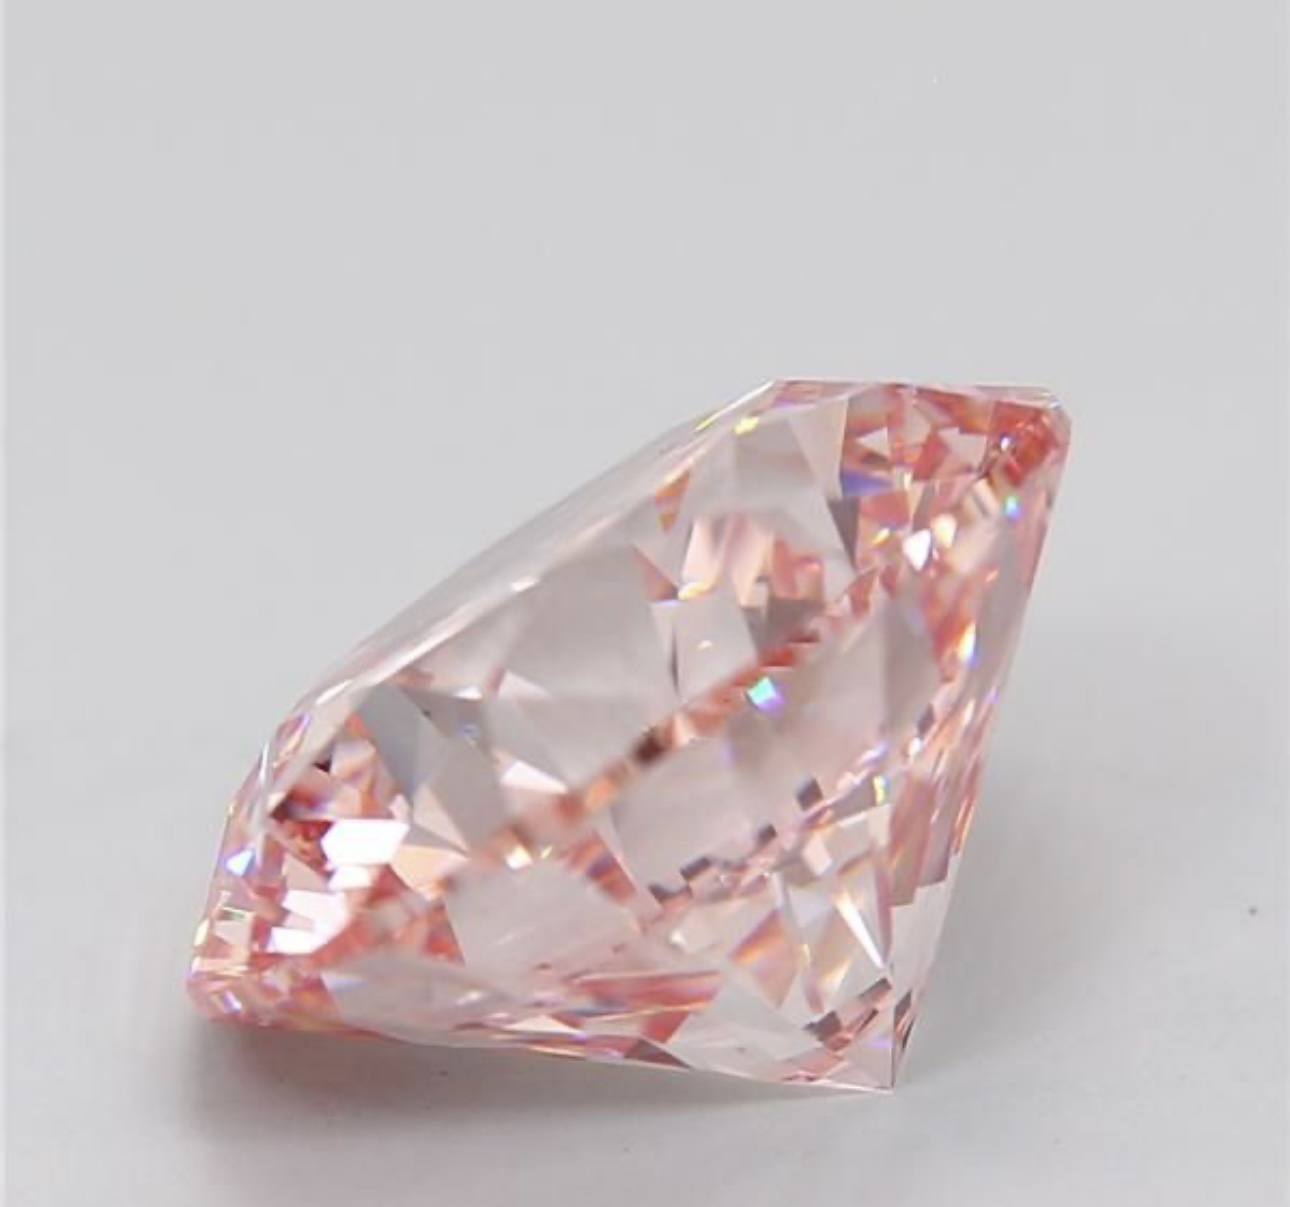 Round Brilliant Cut Diamond 7.42 Carat Fancy Pink Colour VS1 Clarity - IGI Certificate - Image 4 of 8